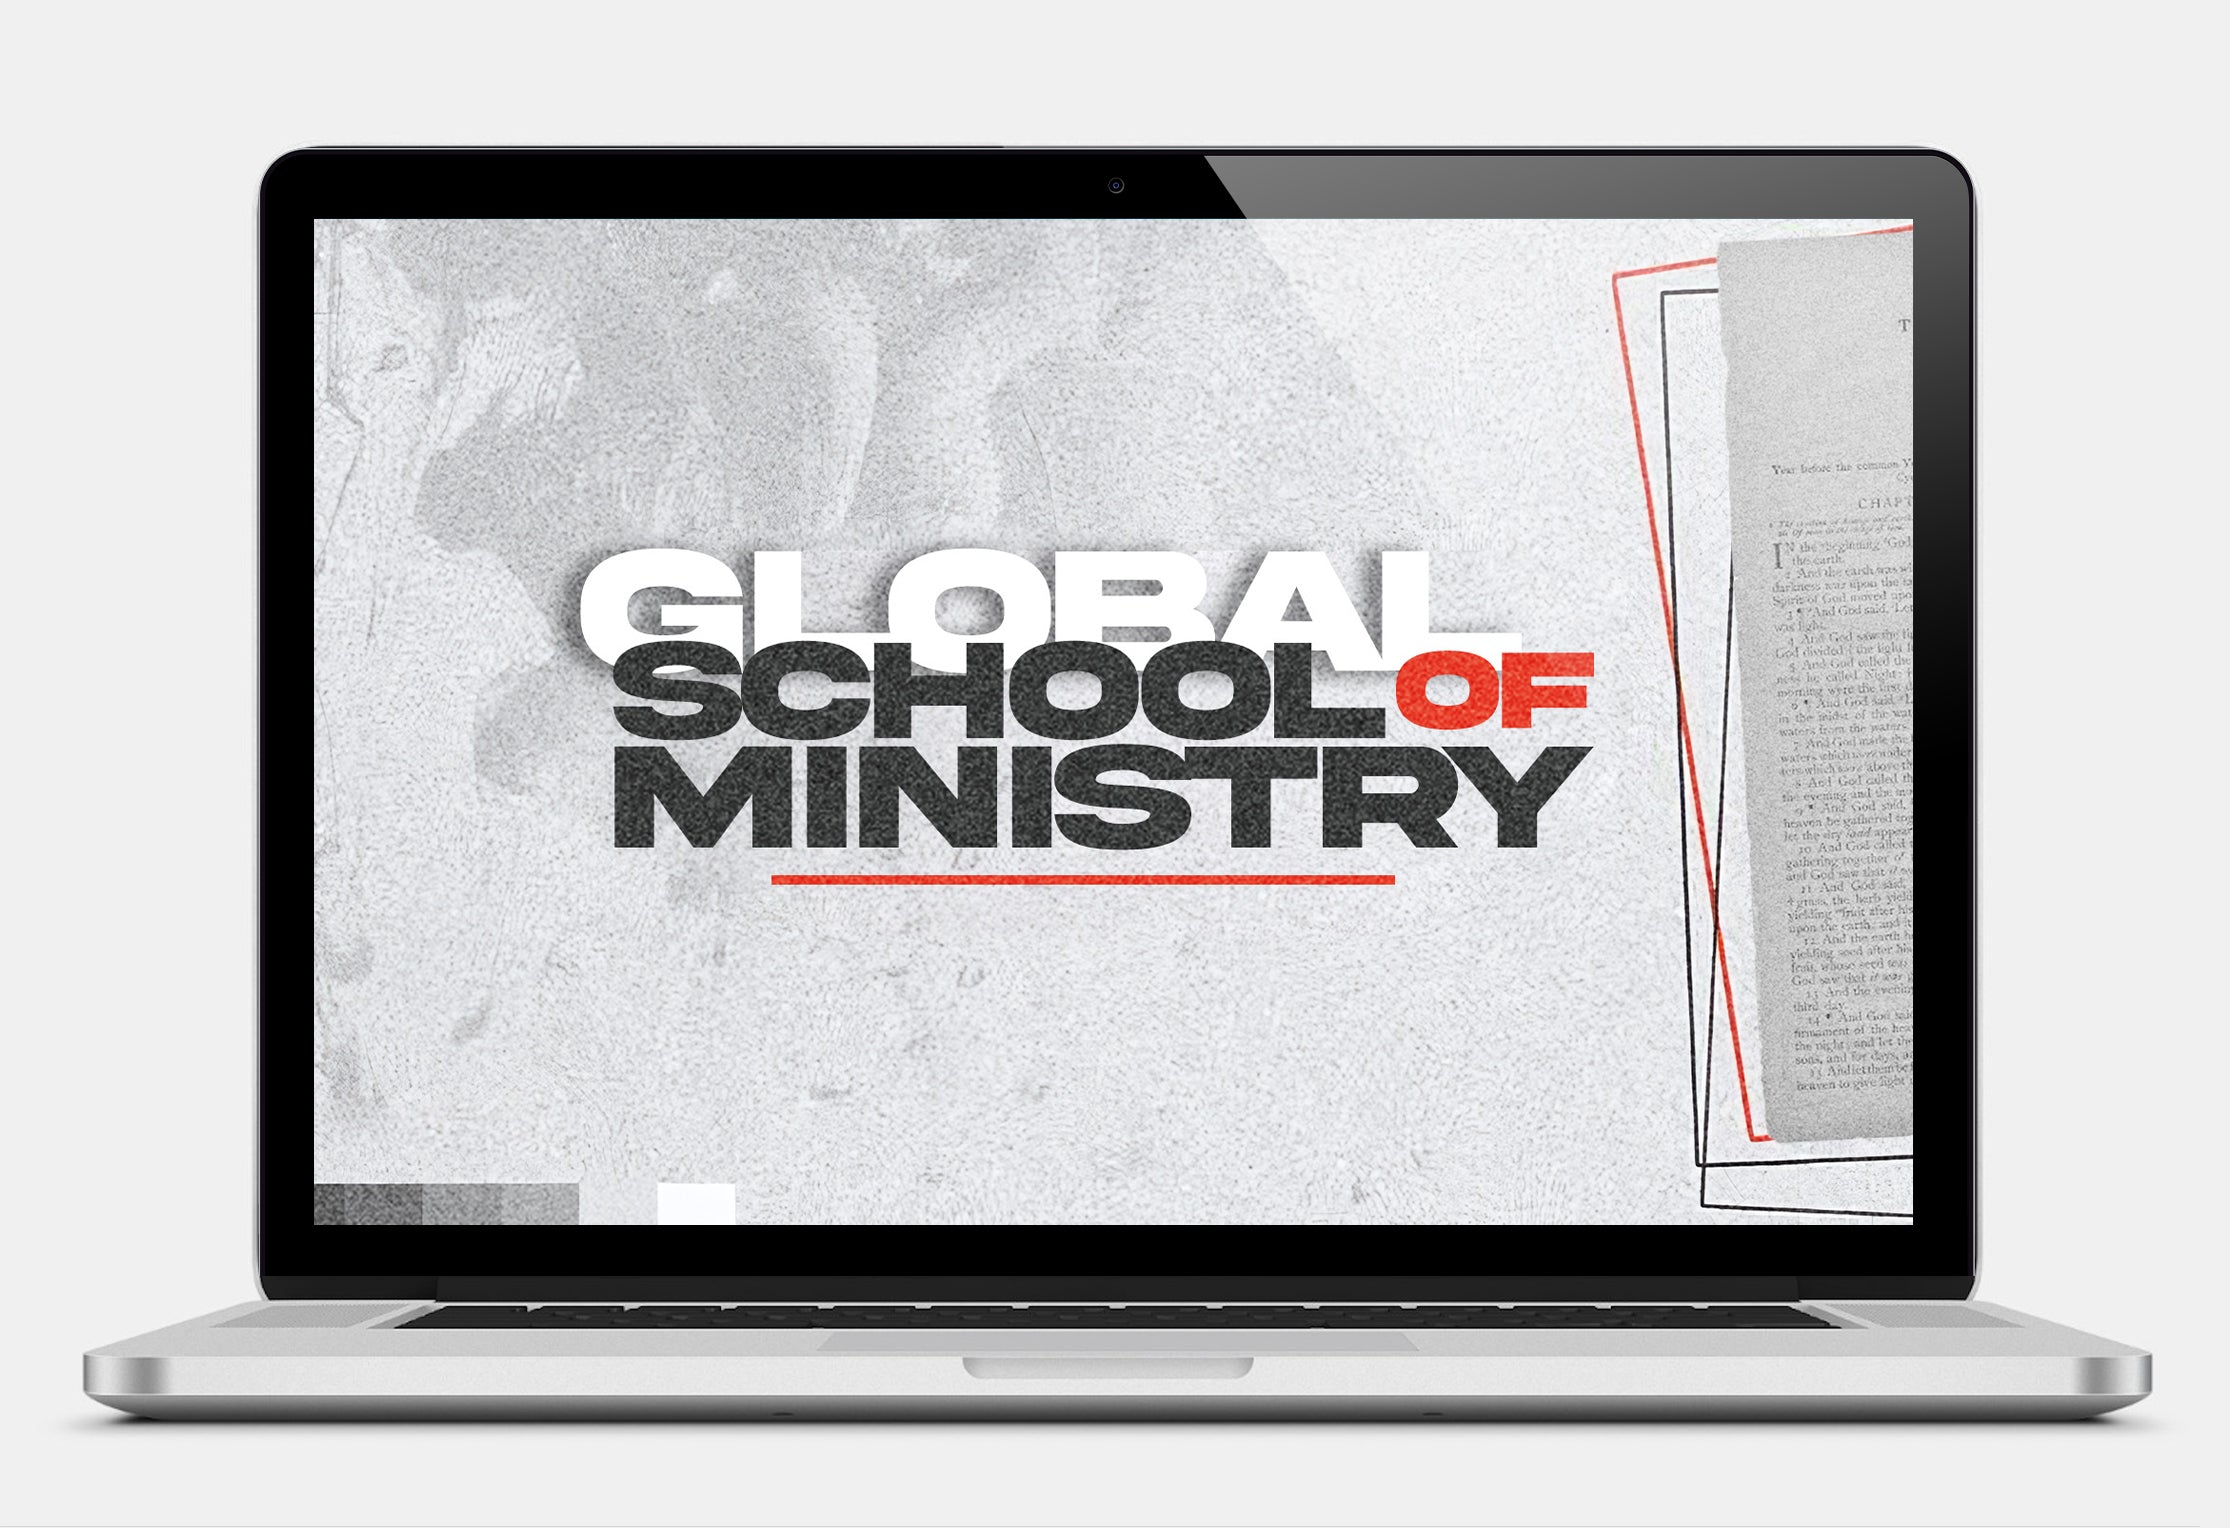 Global School of Ministry